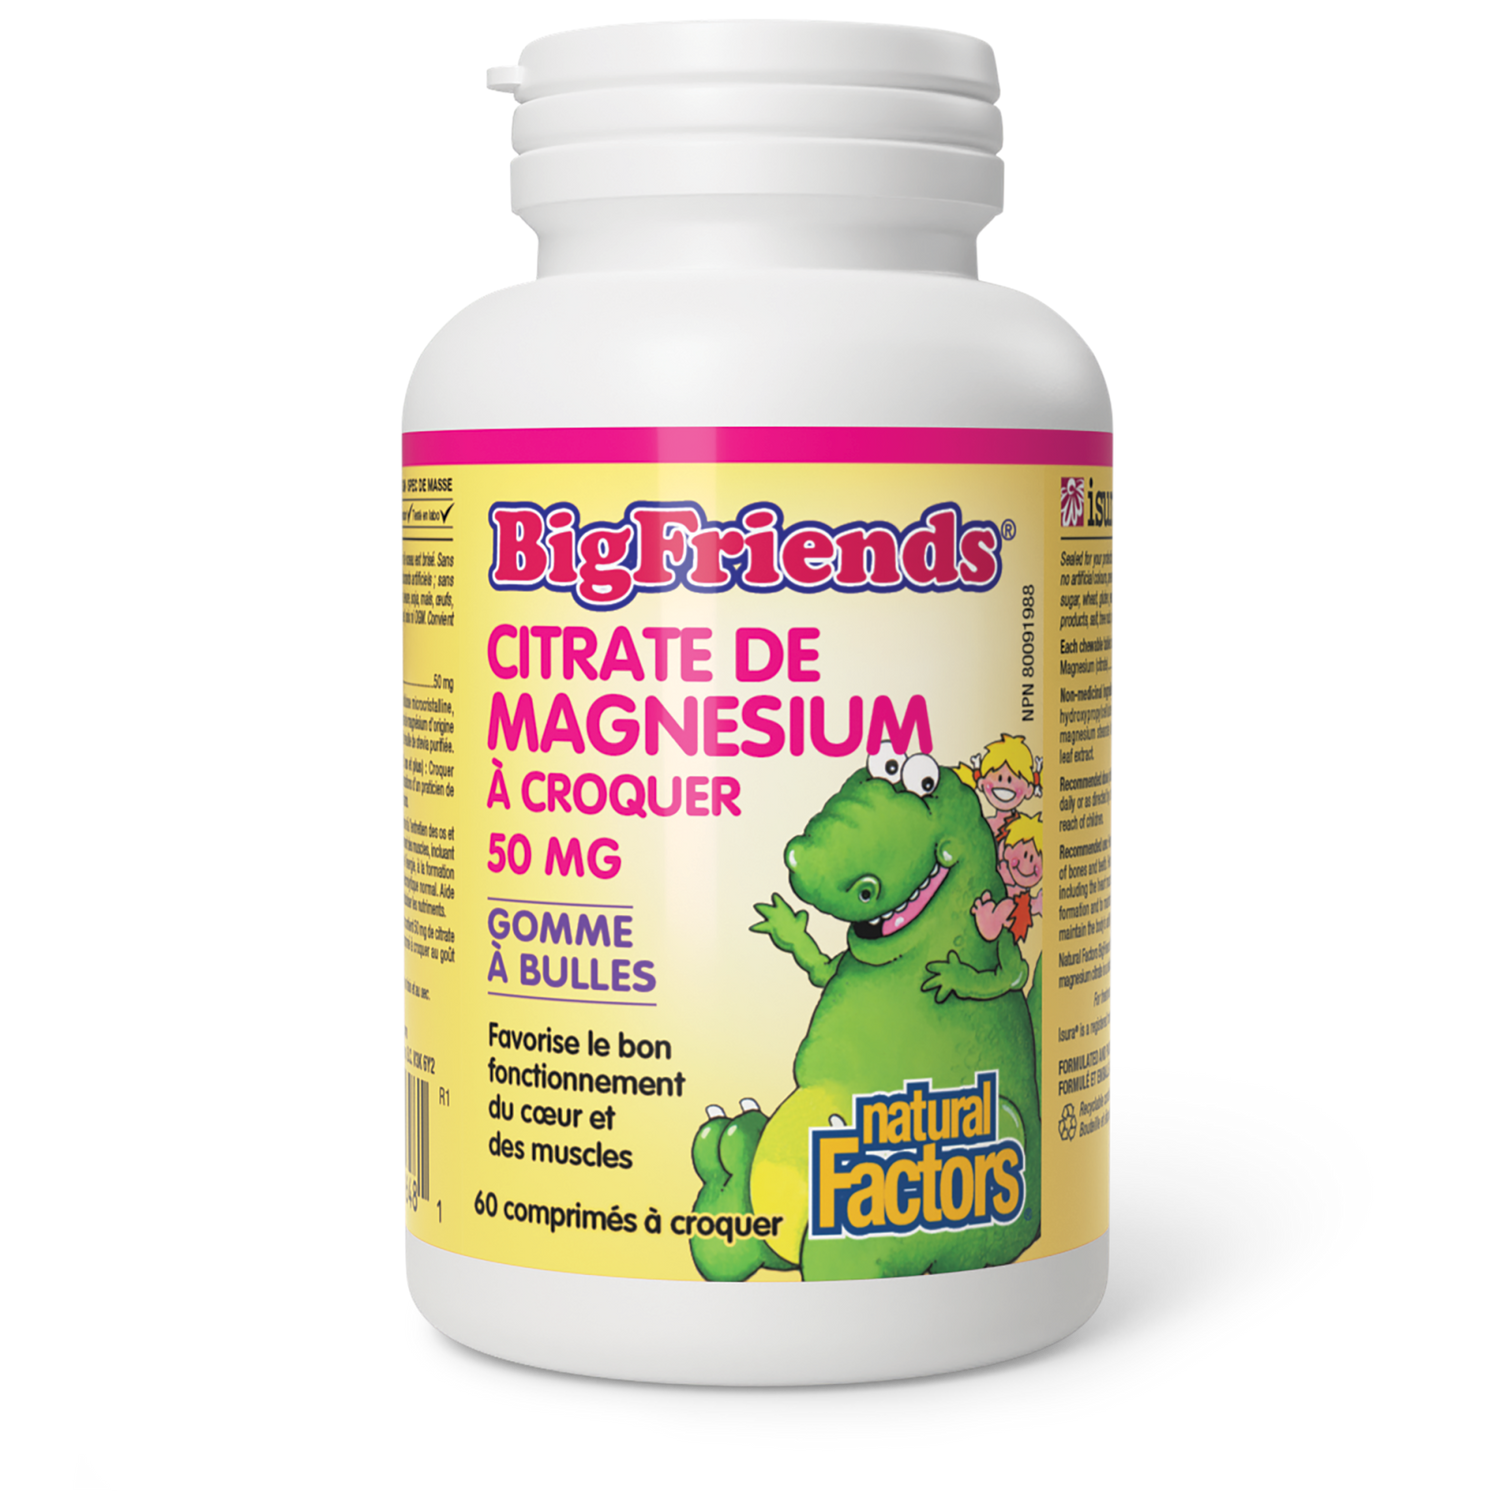 Citrate de magnésium à croquer 50 mg, gomme à bulles, Big Friends, Natural Factors|v|image|1648